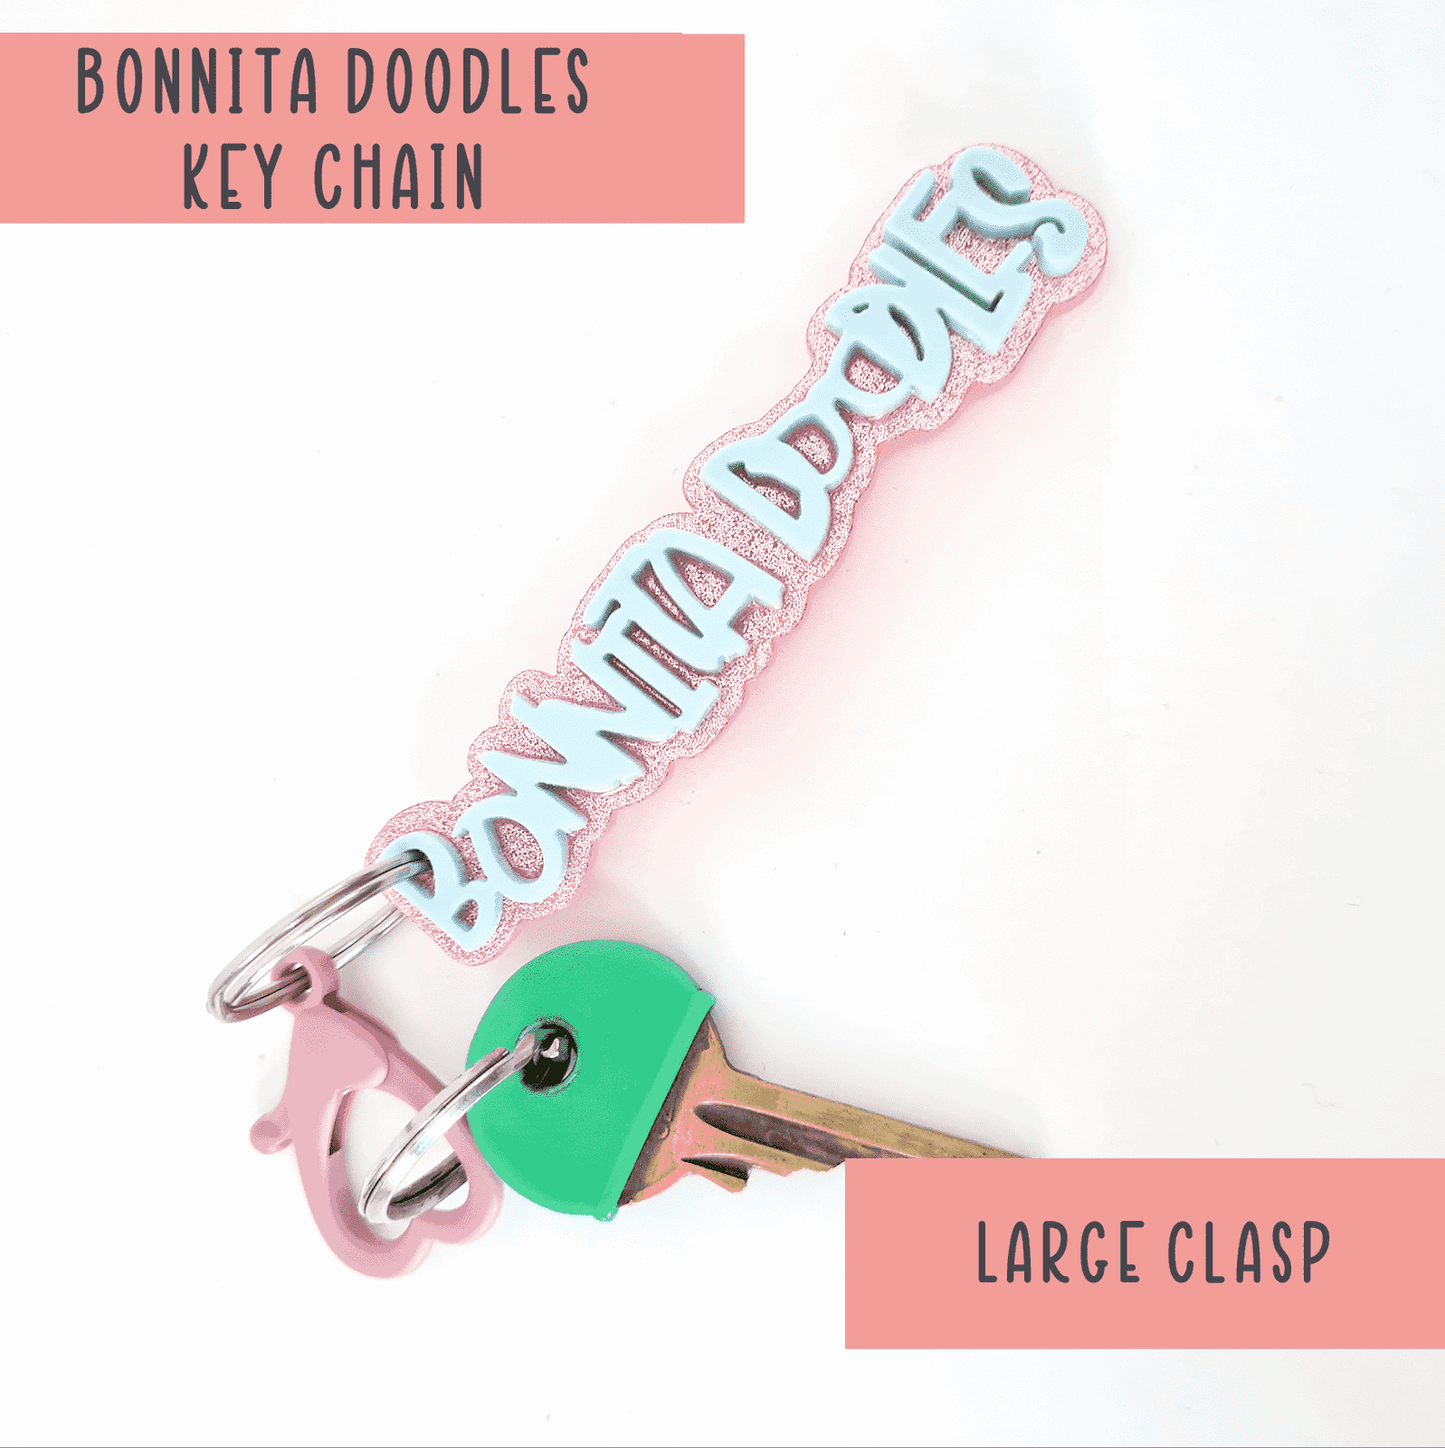 Bonnita Doodles Keychains - Nice and Chunky!